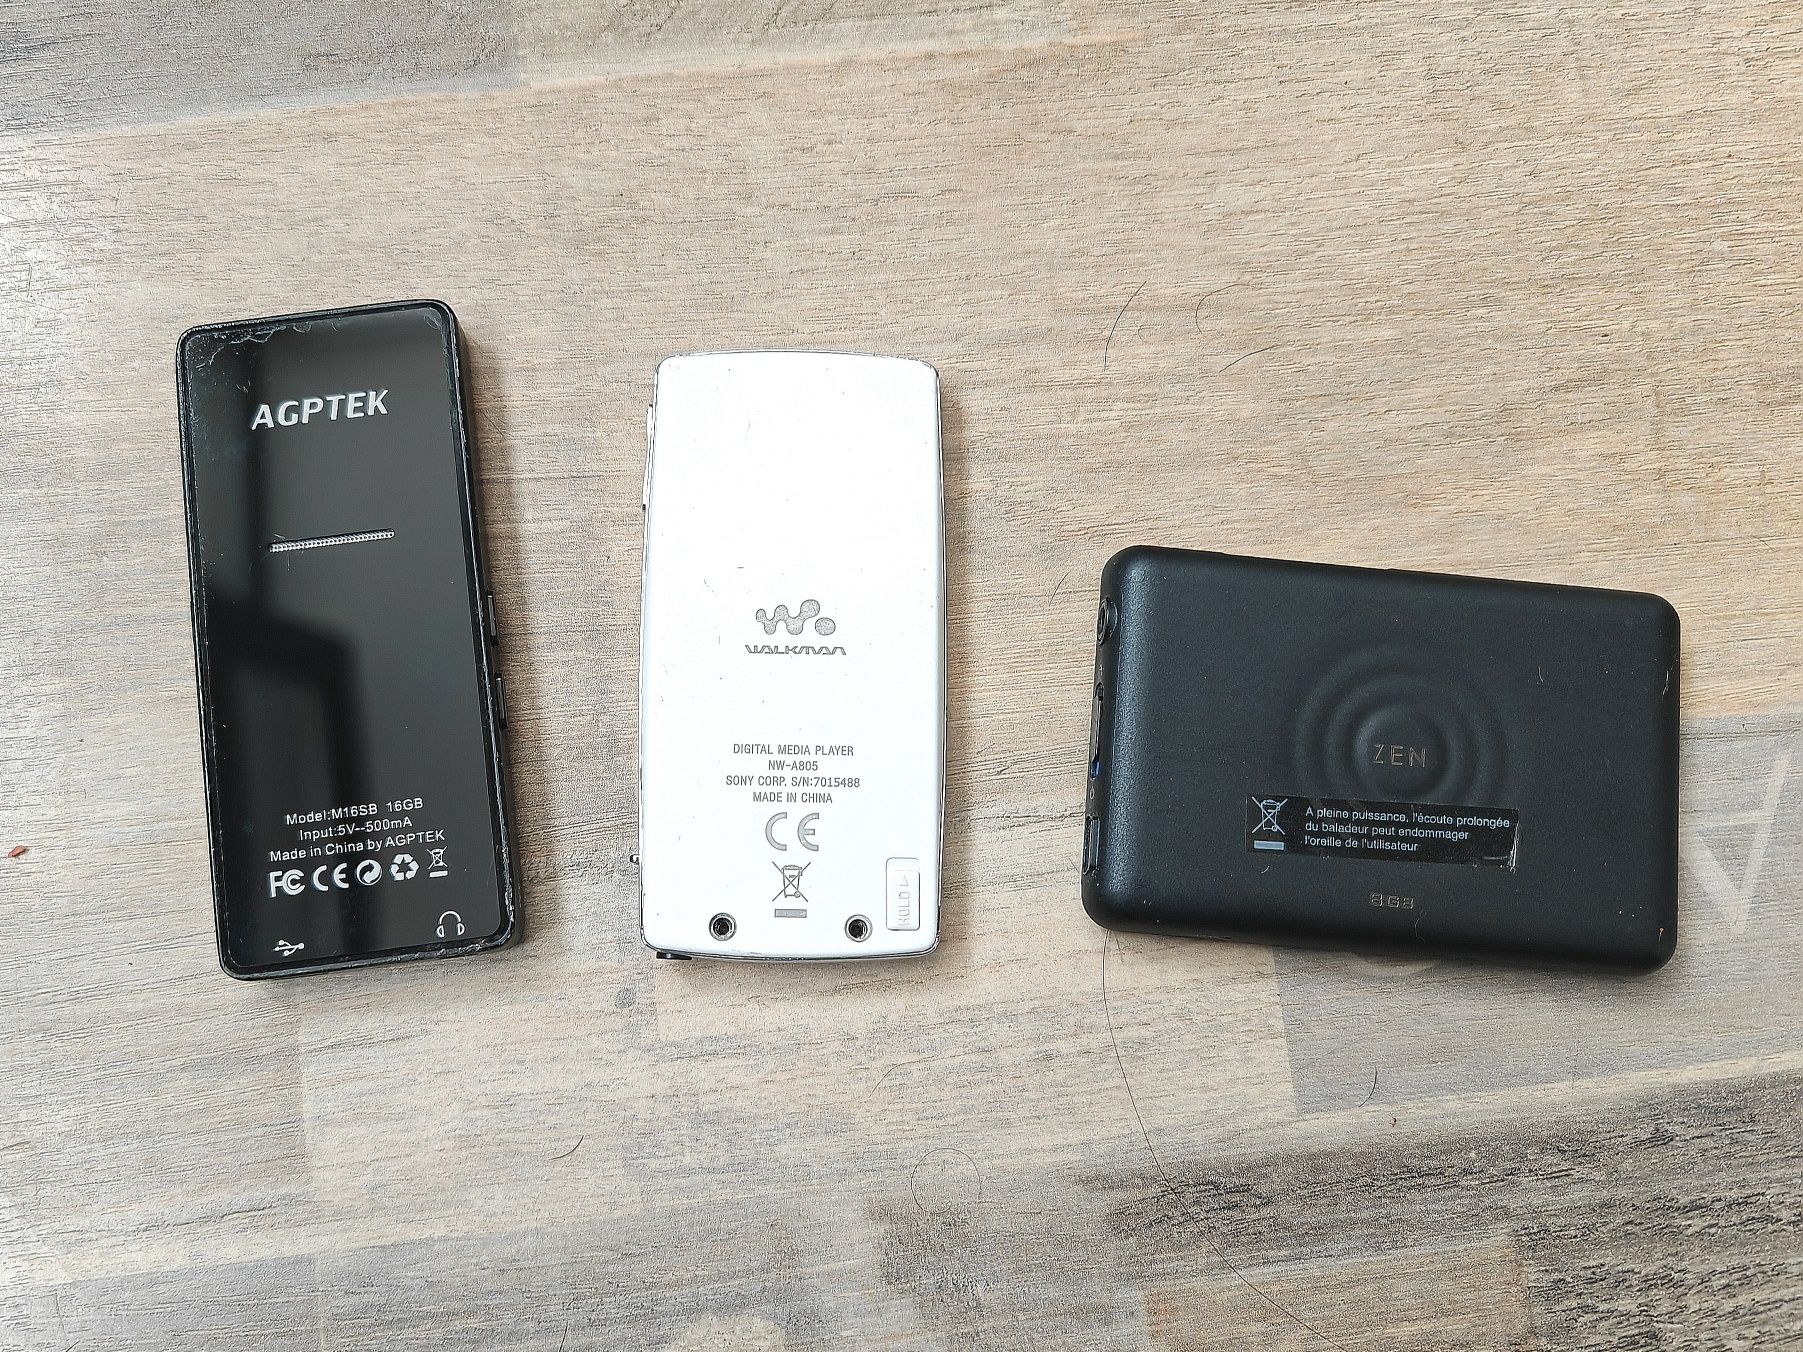 Sony Walkman, Creative Zen, Agptek Mp3 Mp4 player